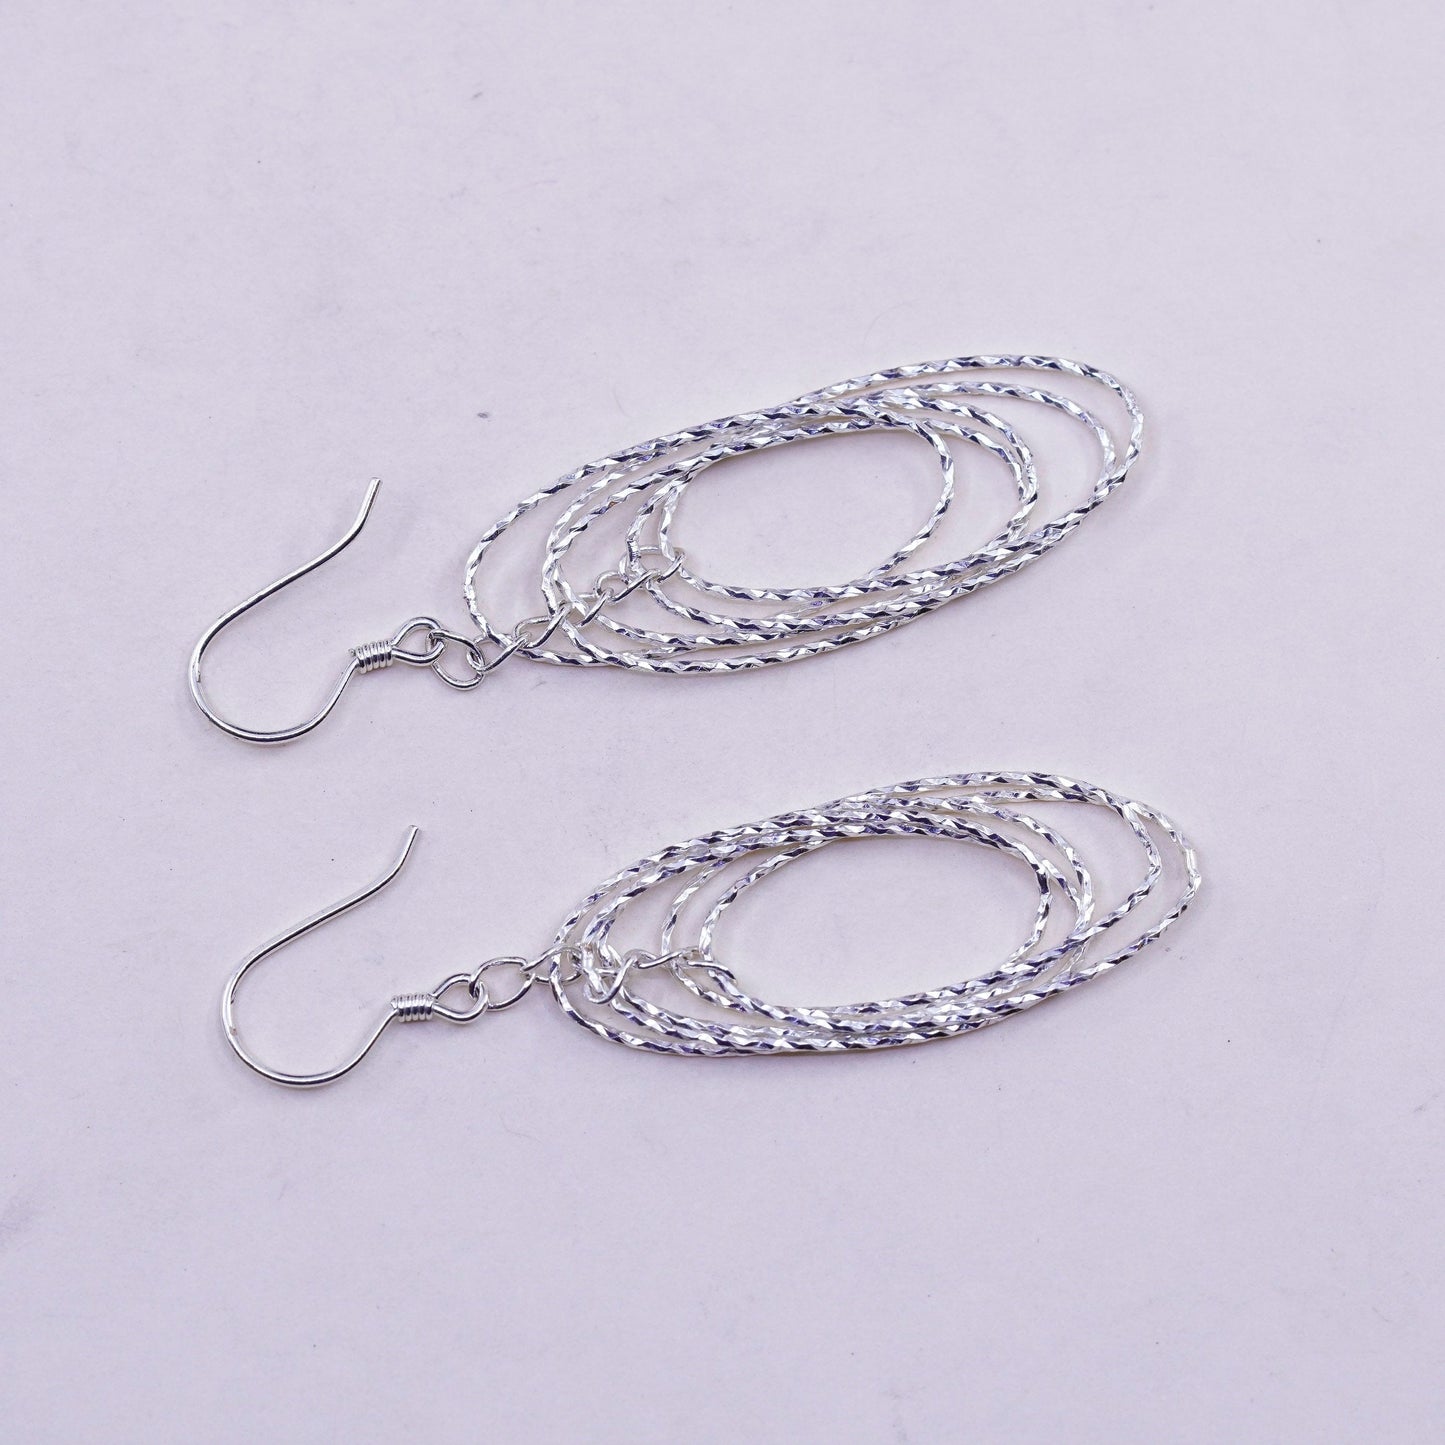 Vintage sterling silver handmade earrings, 925 textured oval dangle